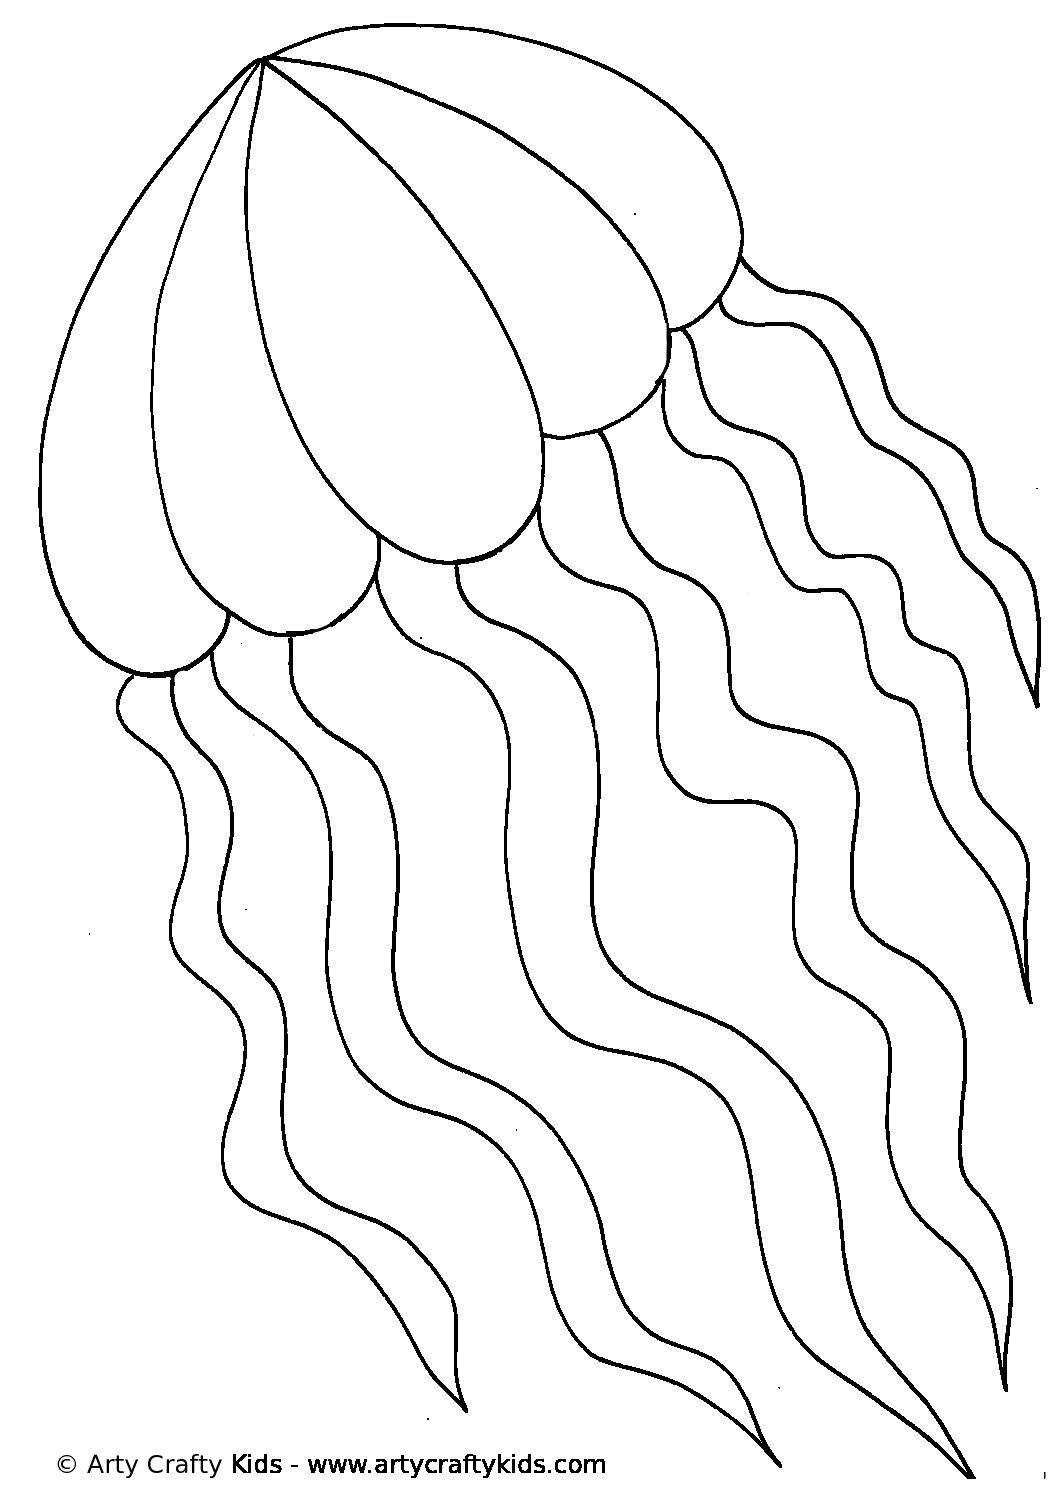 jellyfish-outline-arty-crafty-kids